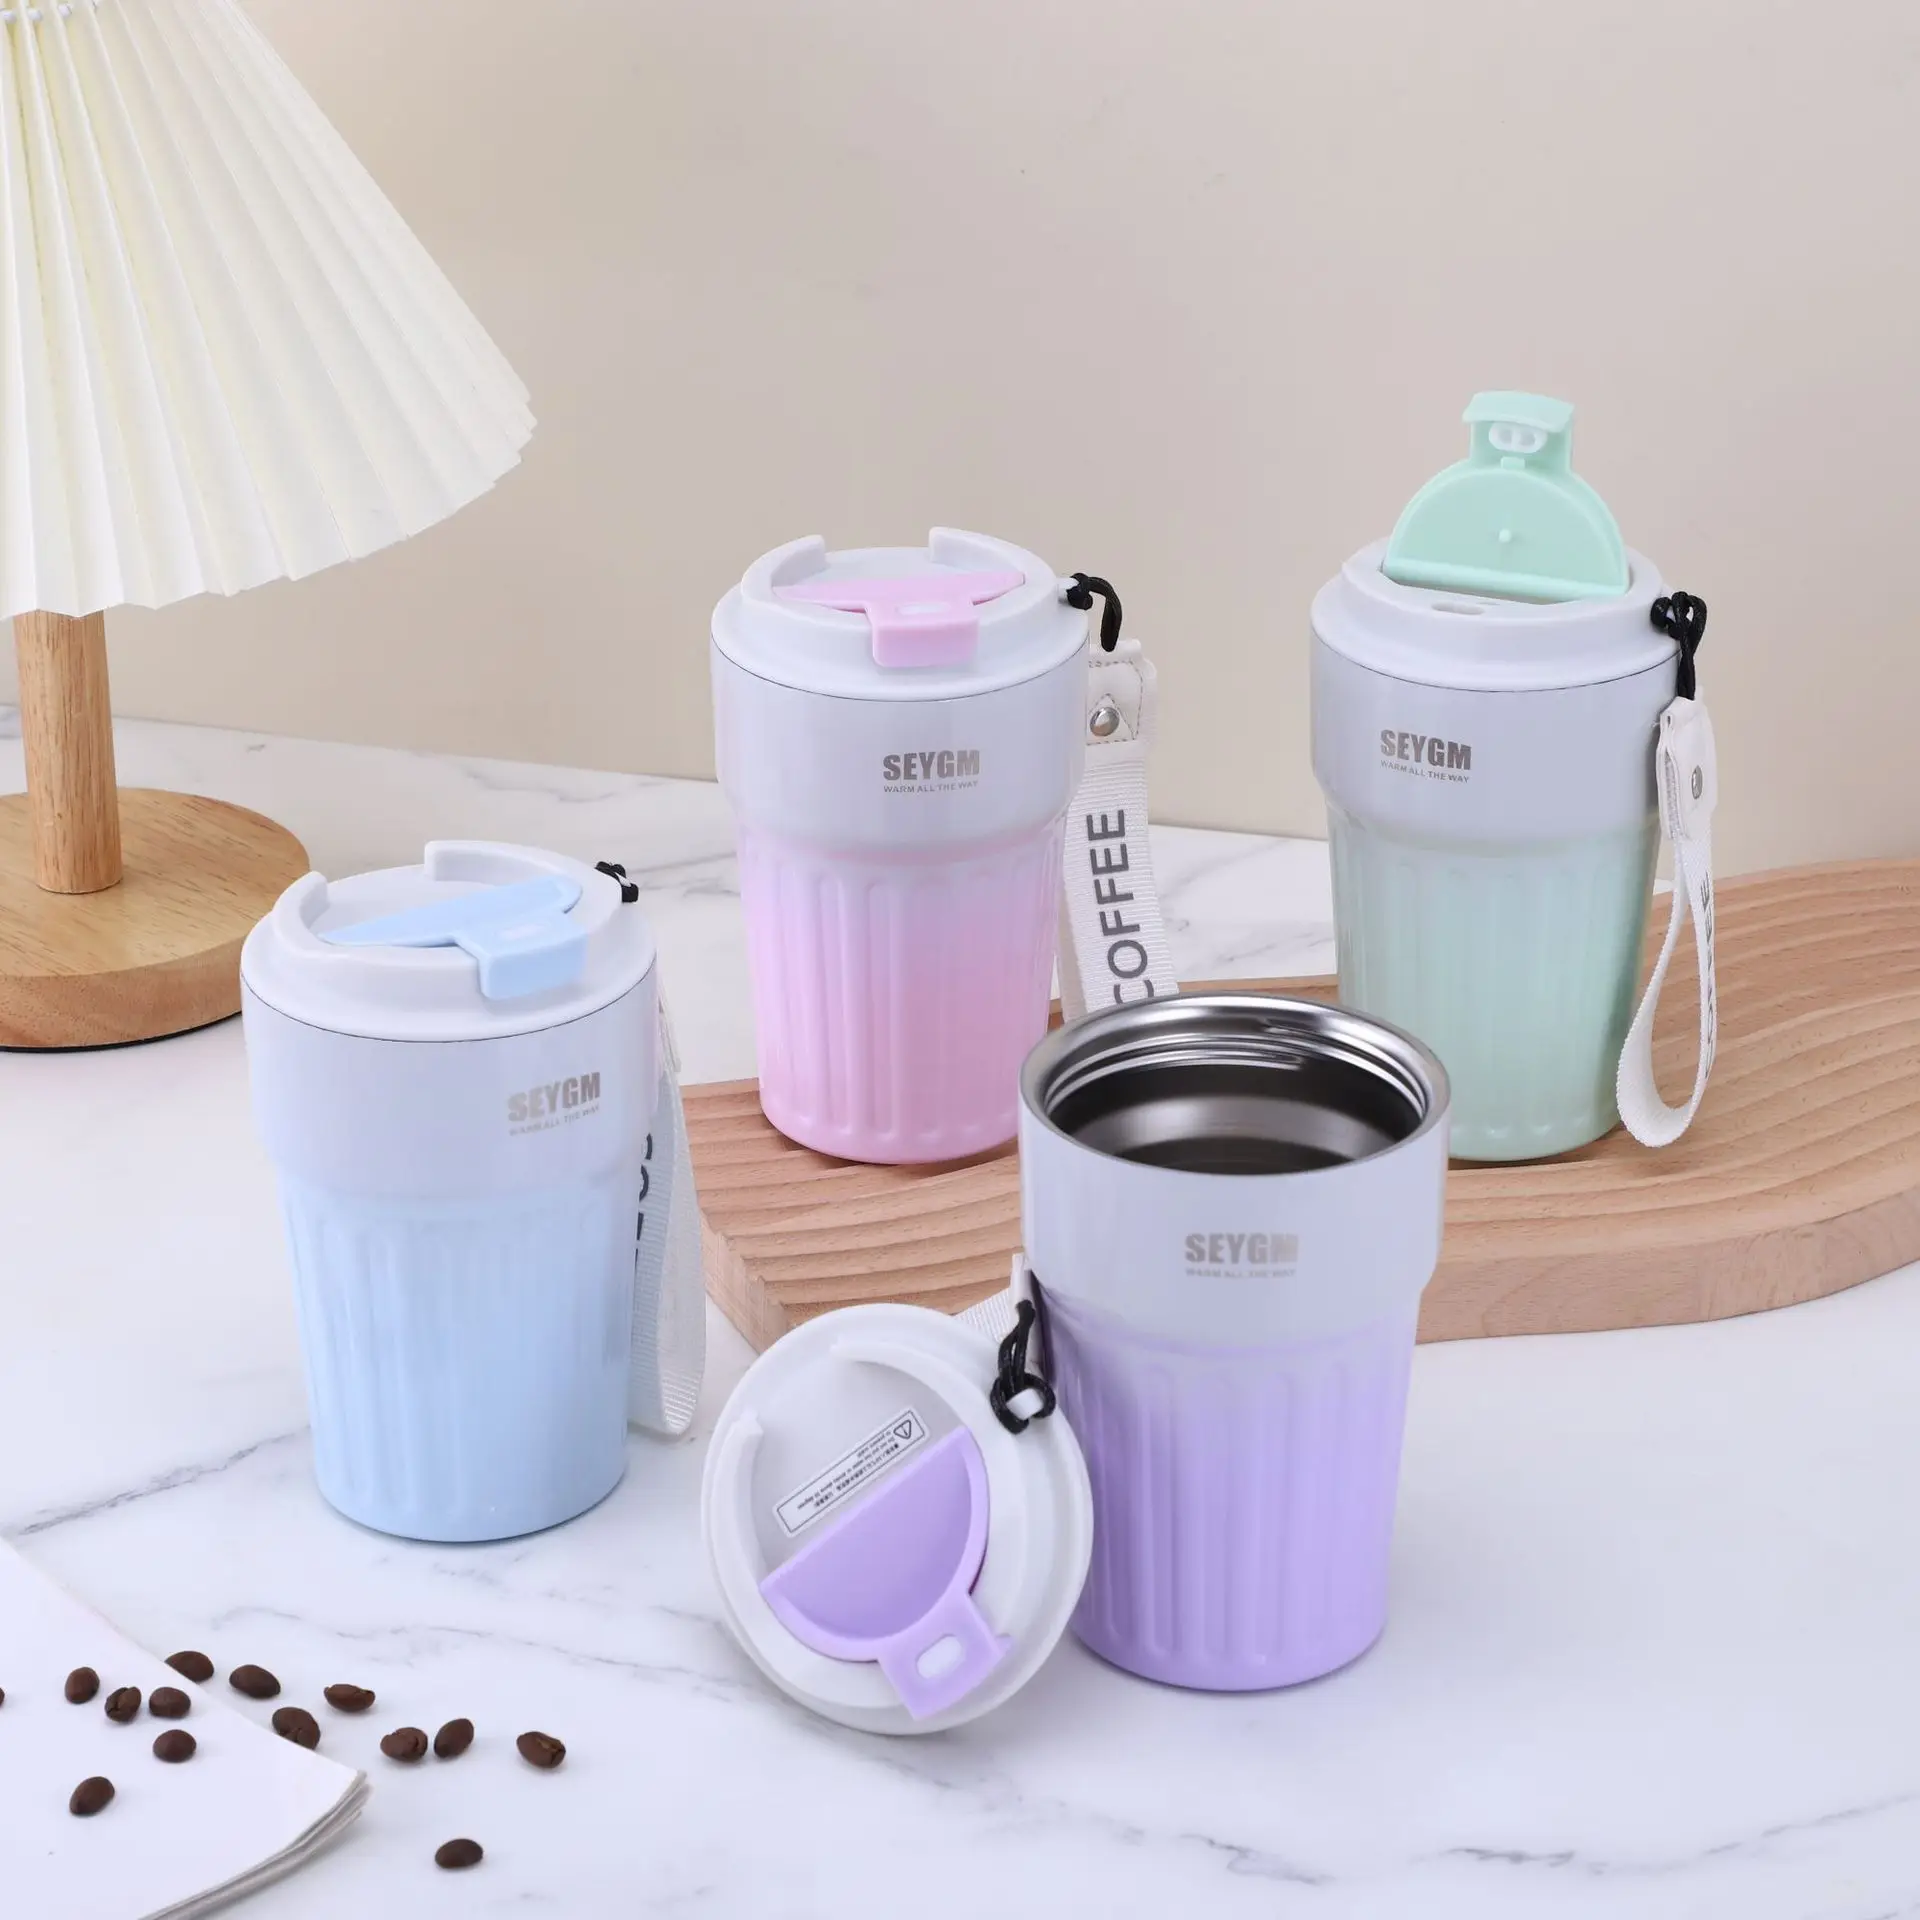  Hydro Flask Mug - Stainless Steel Reusable Tea Coffee